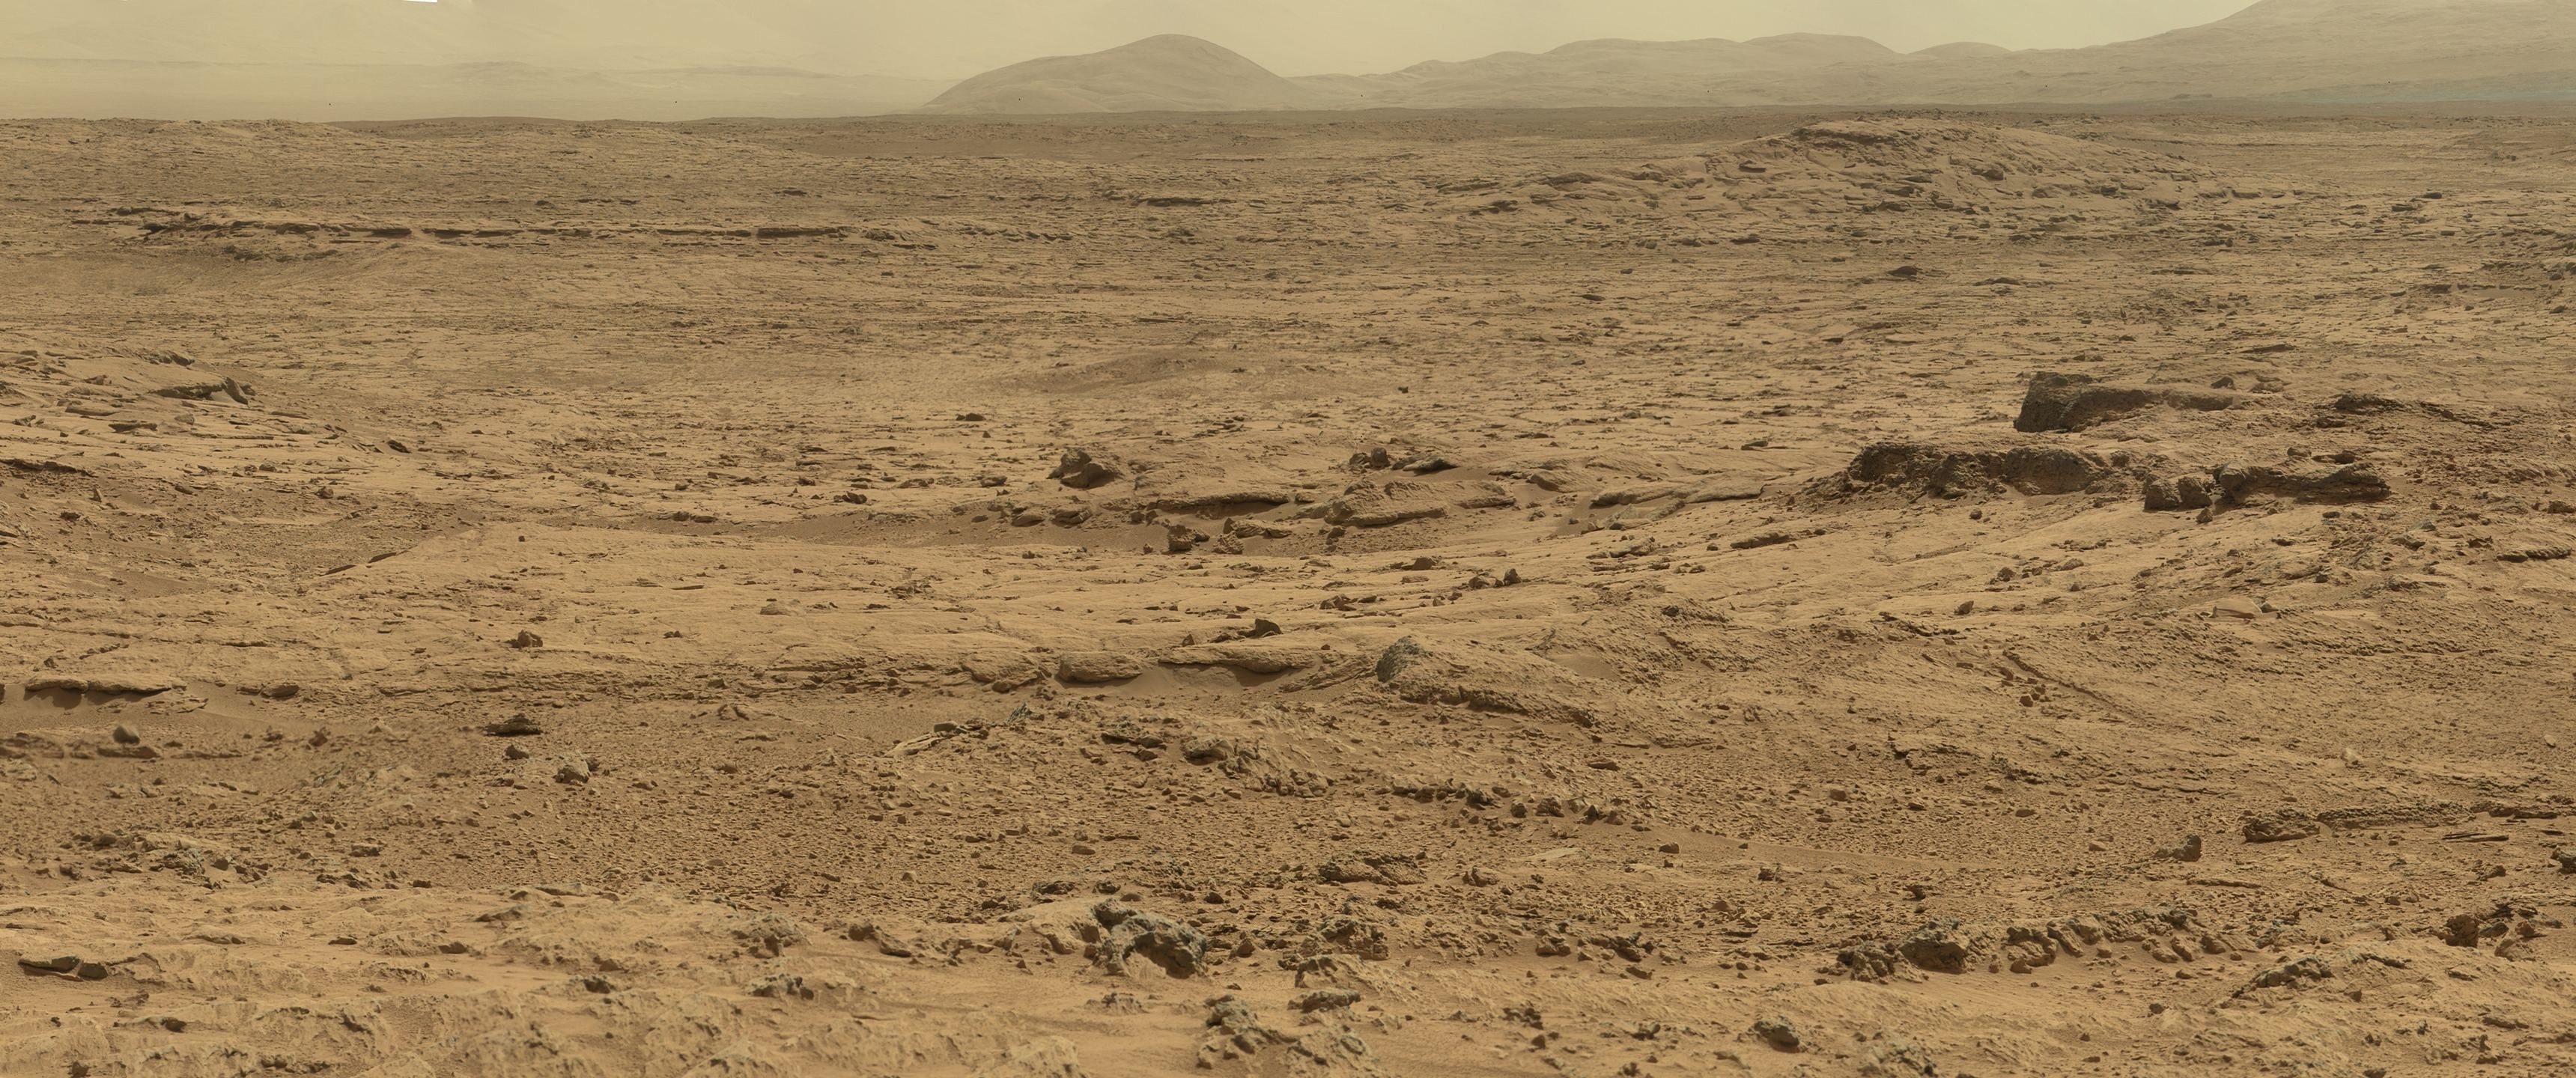 3440x1440 Mars Curiosity: PIA16453-F [] ...